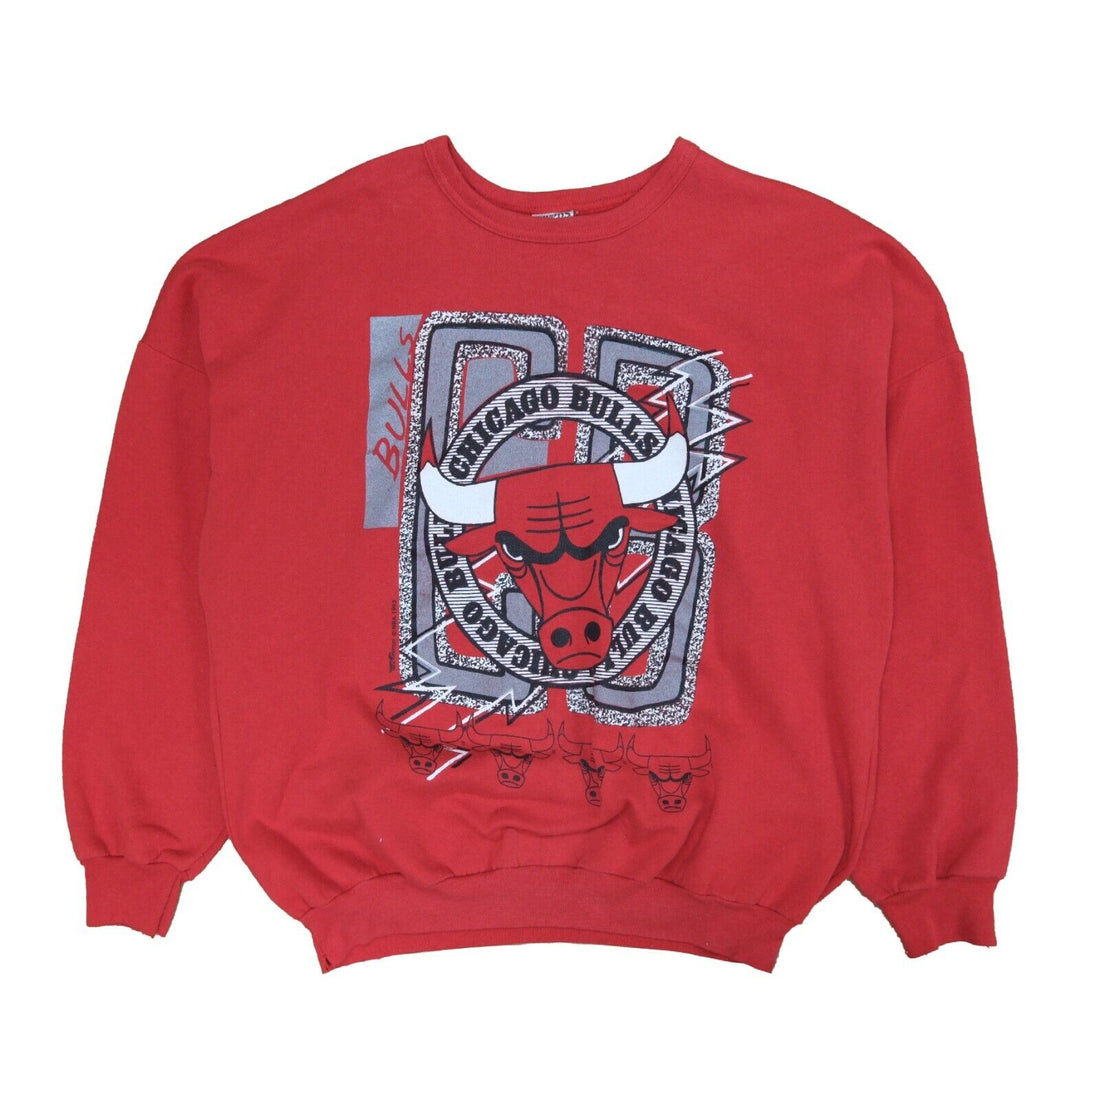 Vintage Chicago Bulls Ravens Sweatshirt Crewneck Size XL Red 90s NBA